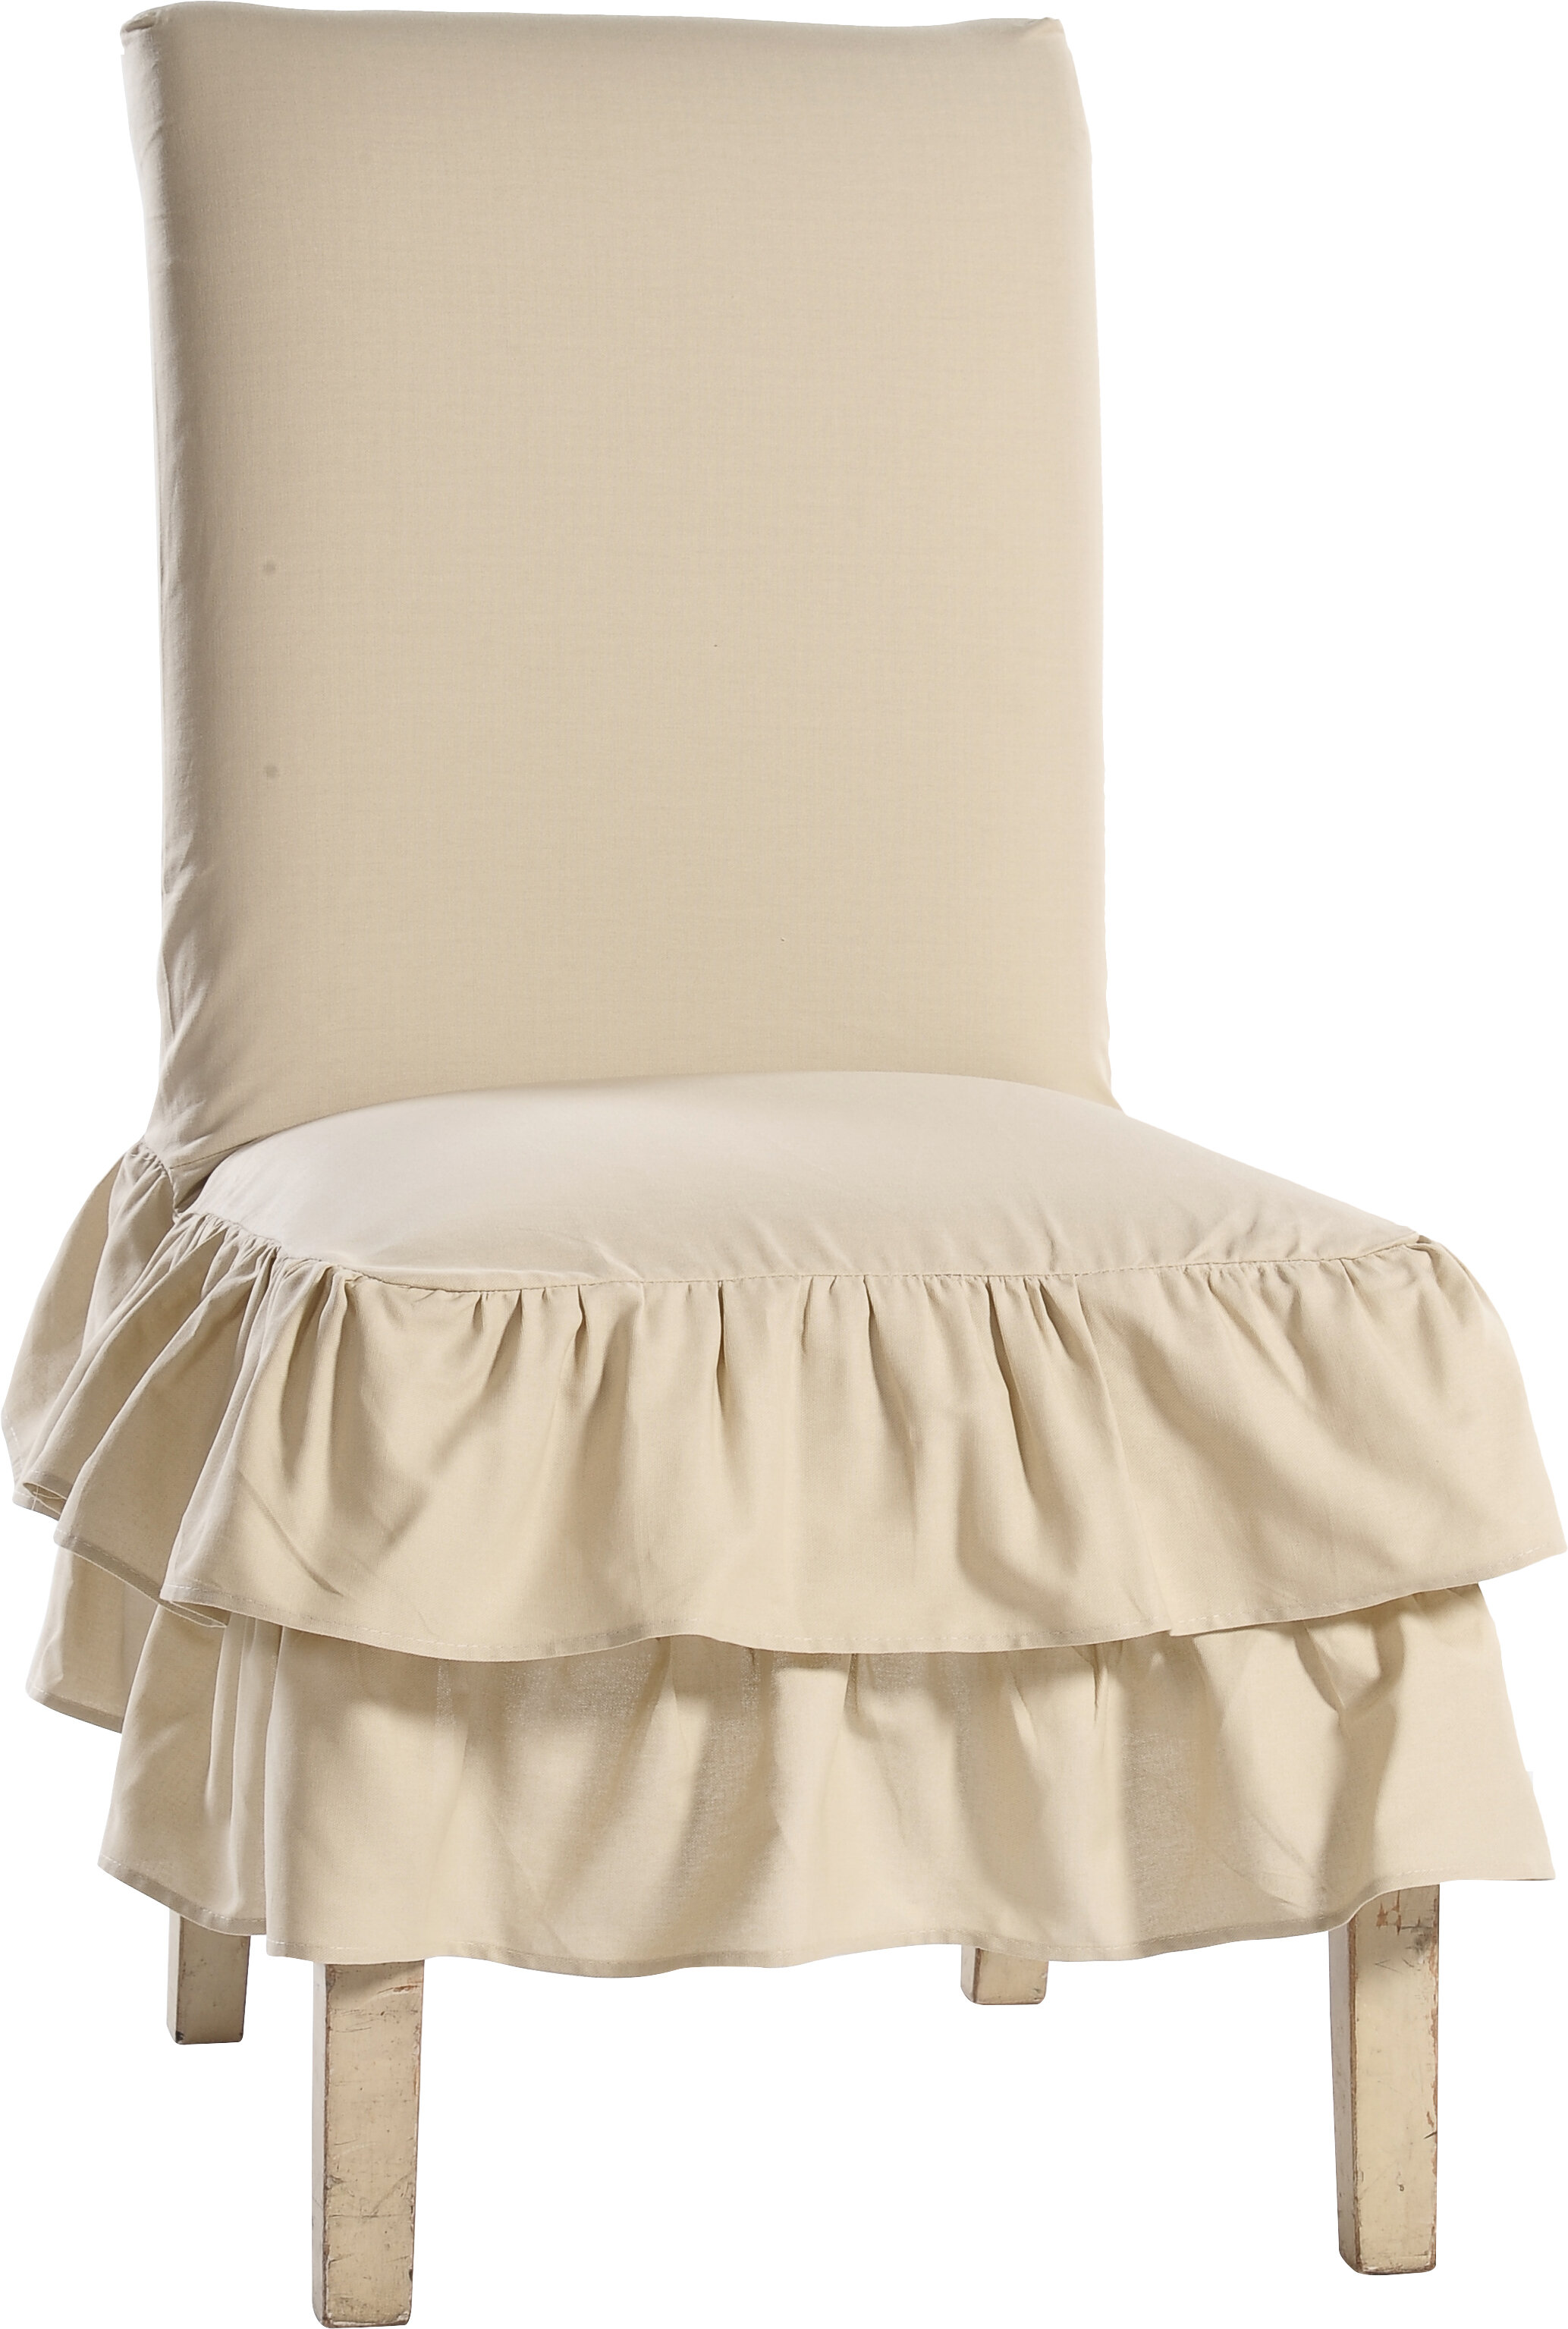 Chair skirt prone